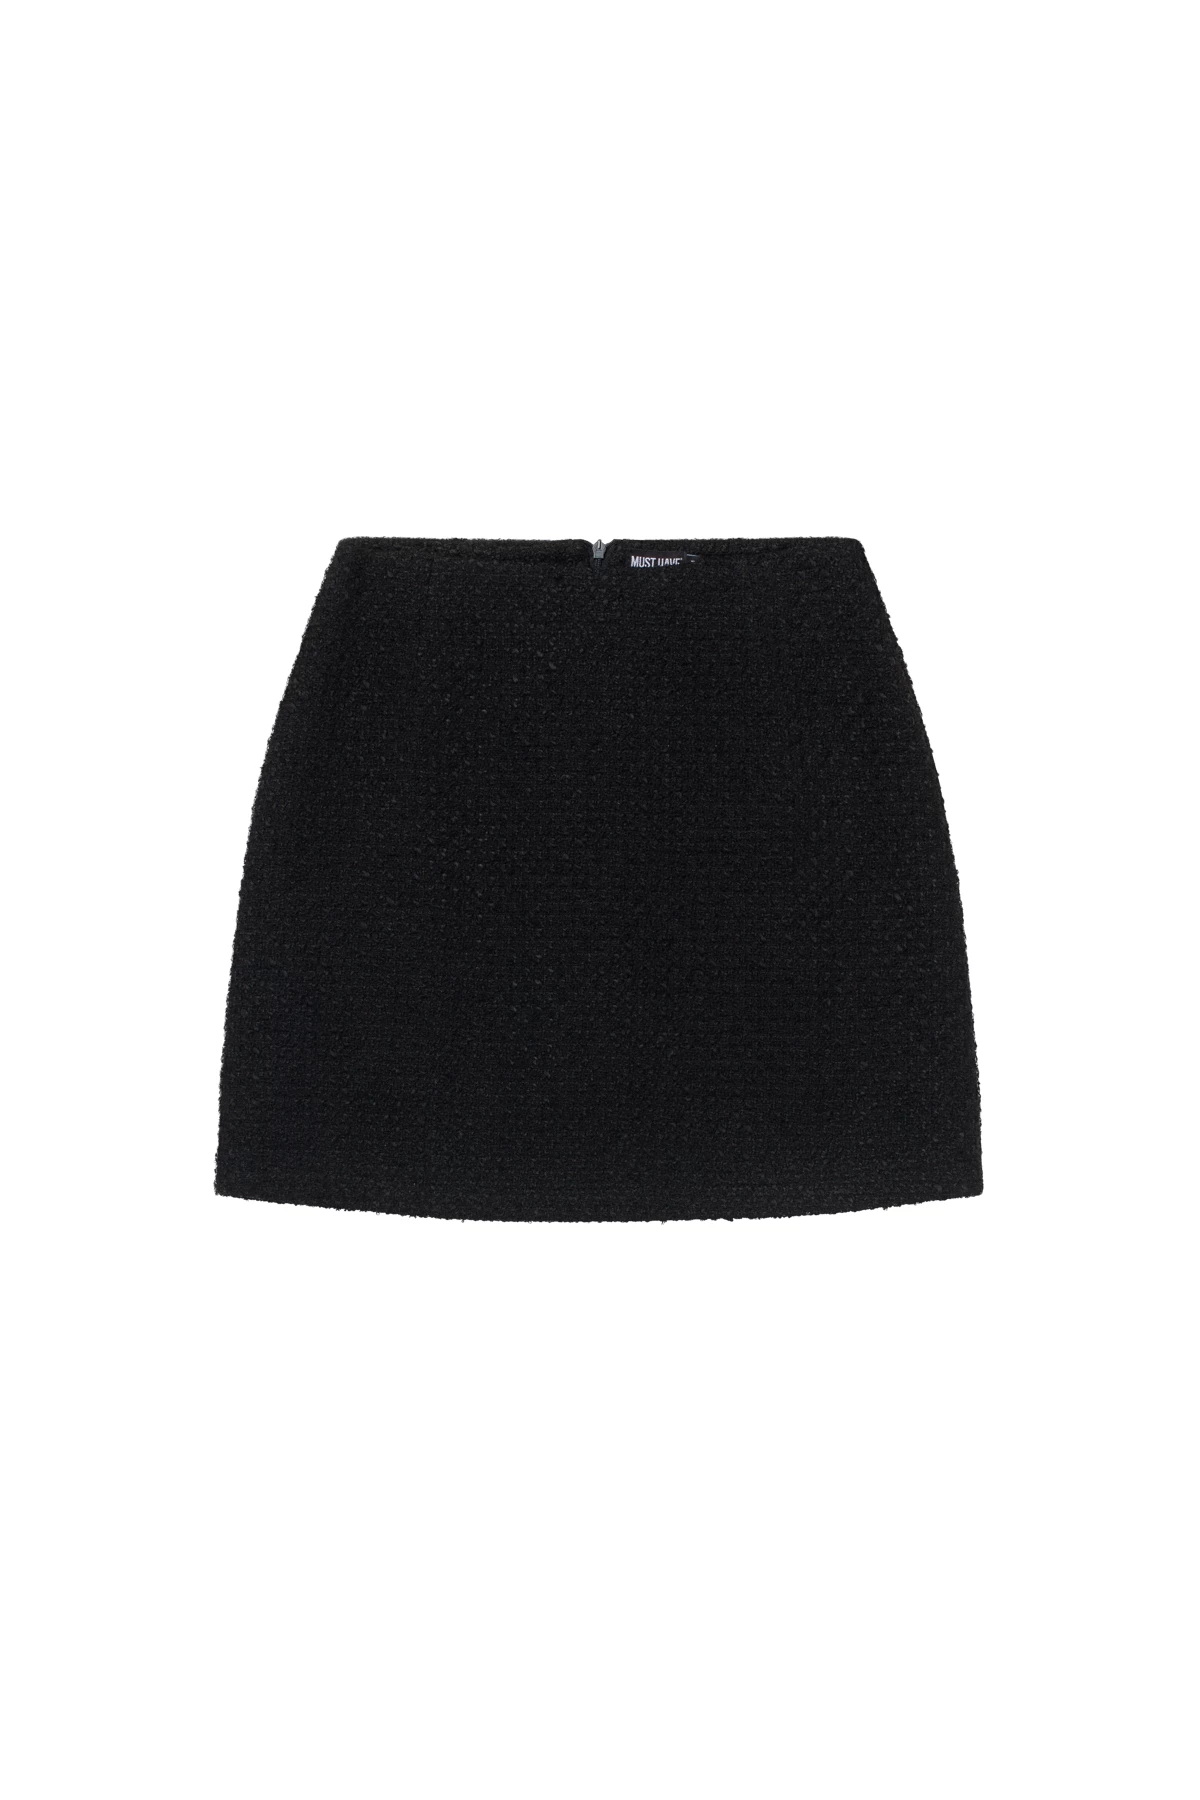 Black tweed mini skirt with cotton, photo 8